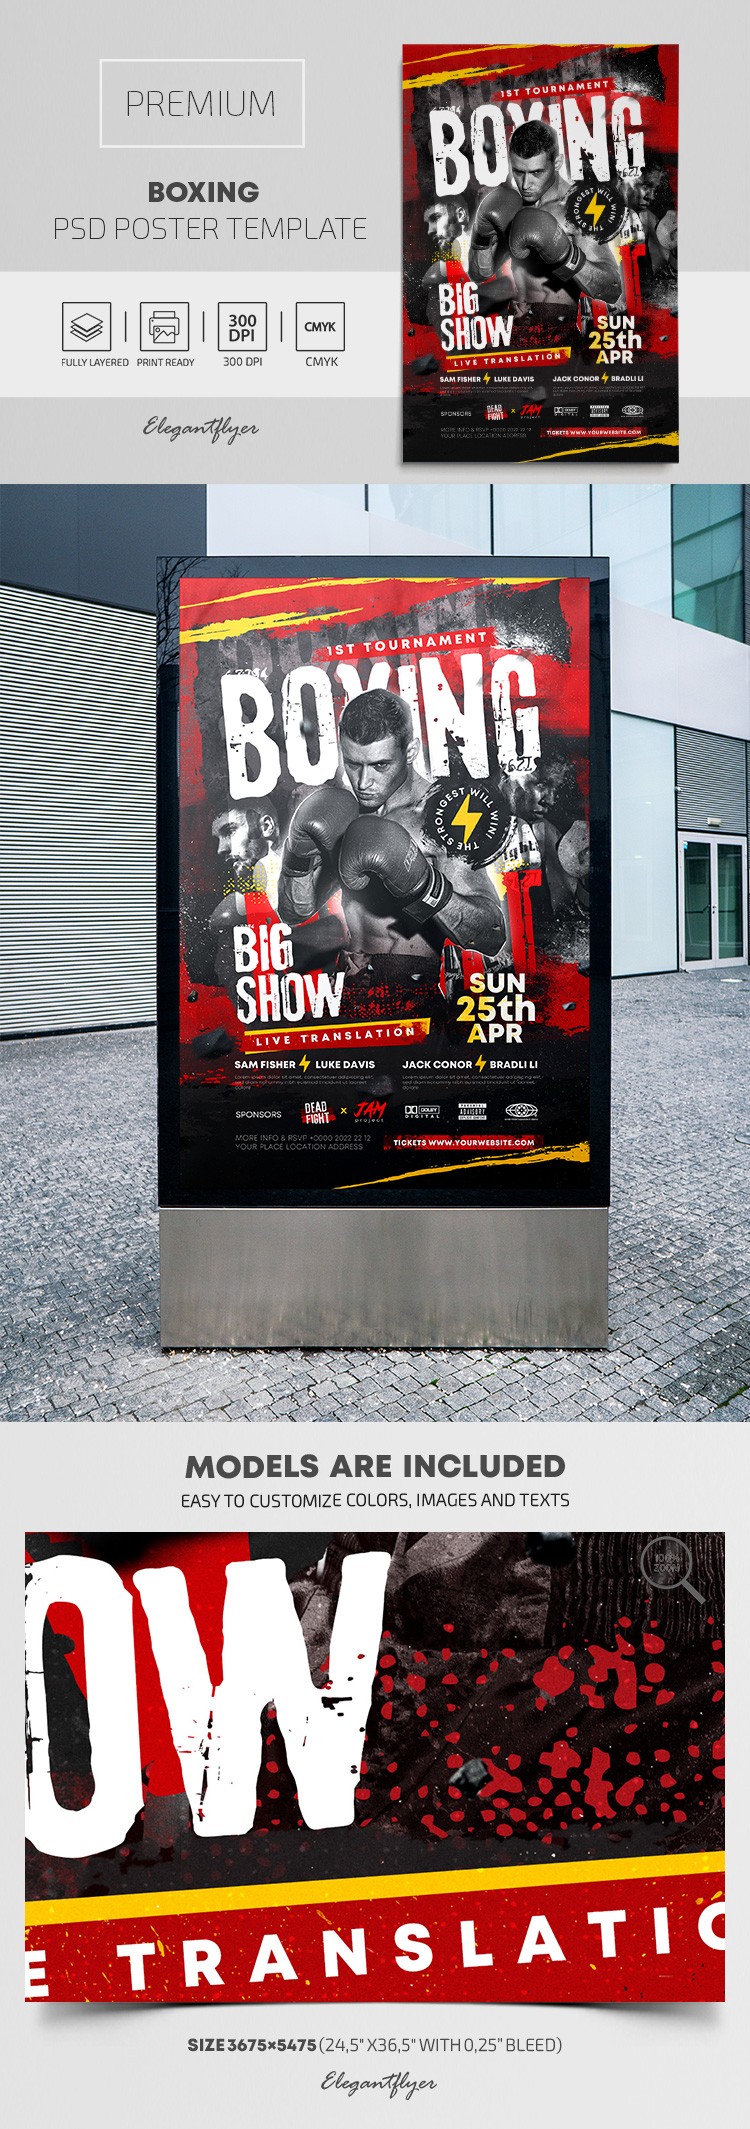 Boxing - Premium PSD Poster Template by ElegantFlyer